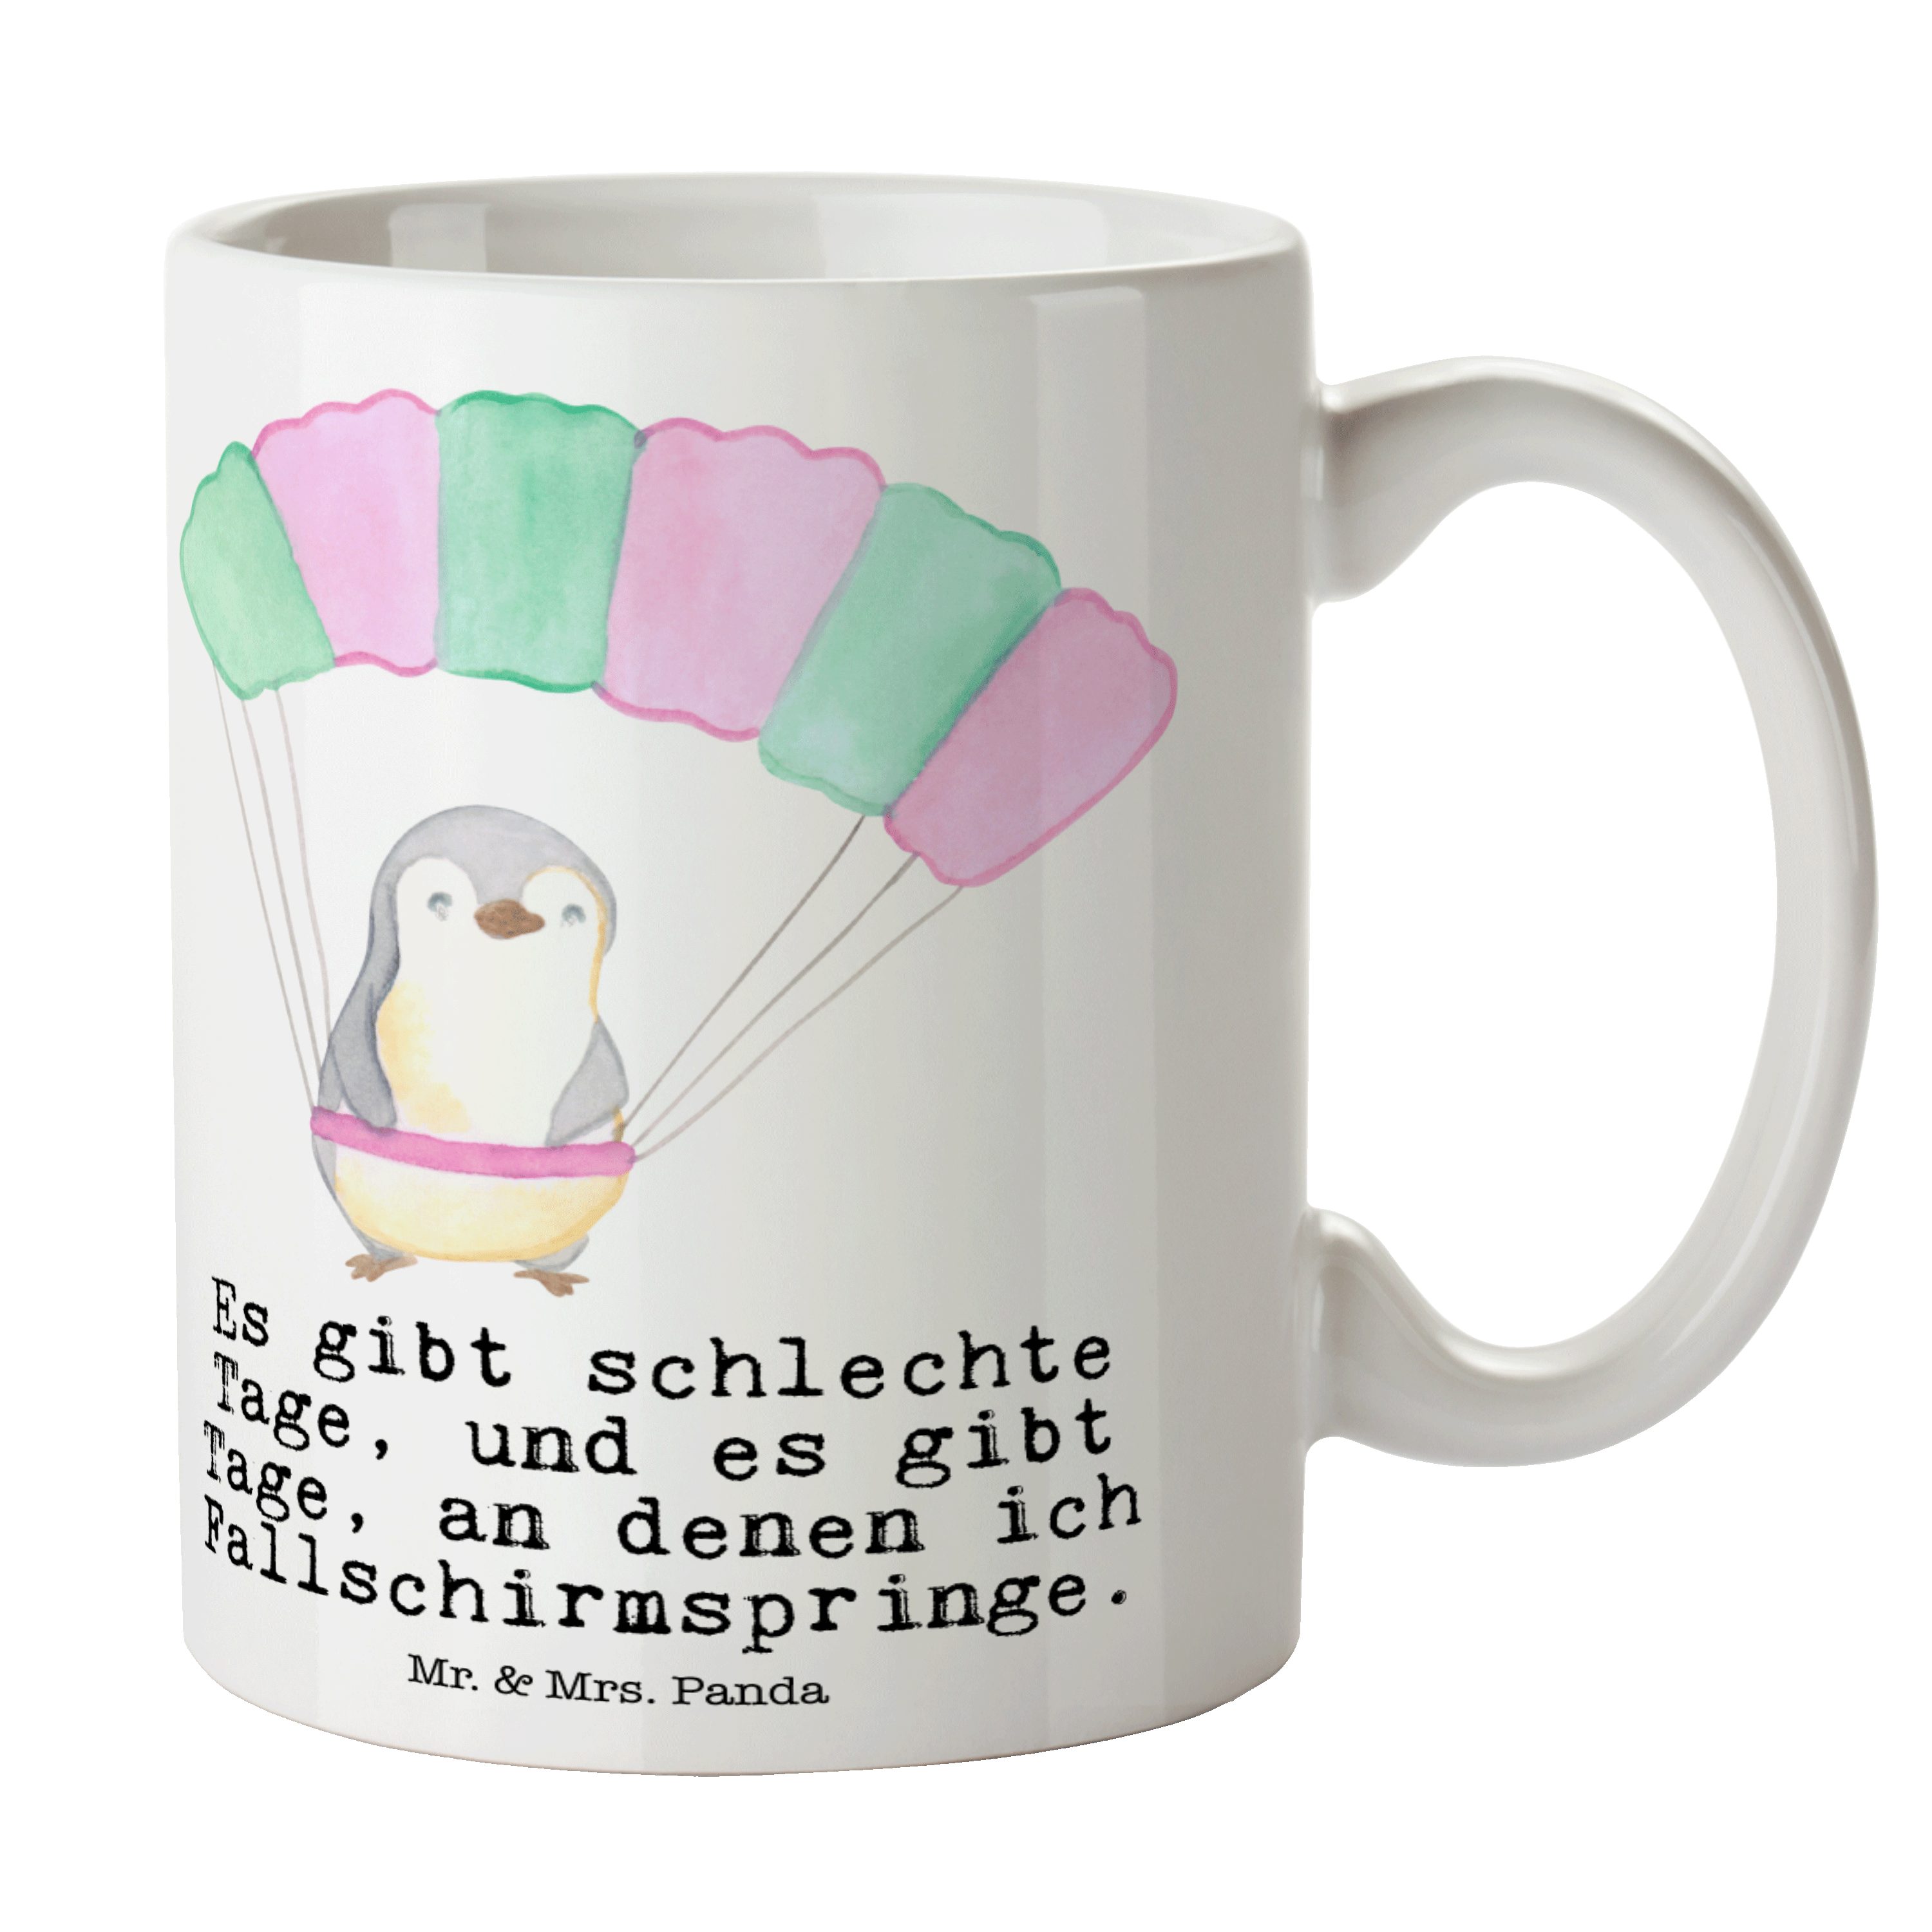 Mr. & Mrs. Panda Tasse Pinguin Fallschirm springen Tage - Weiß - Geschenk, Kaffeebecher, Spo, Keramik